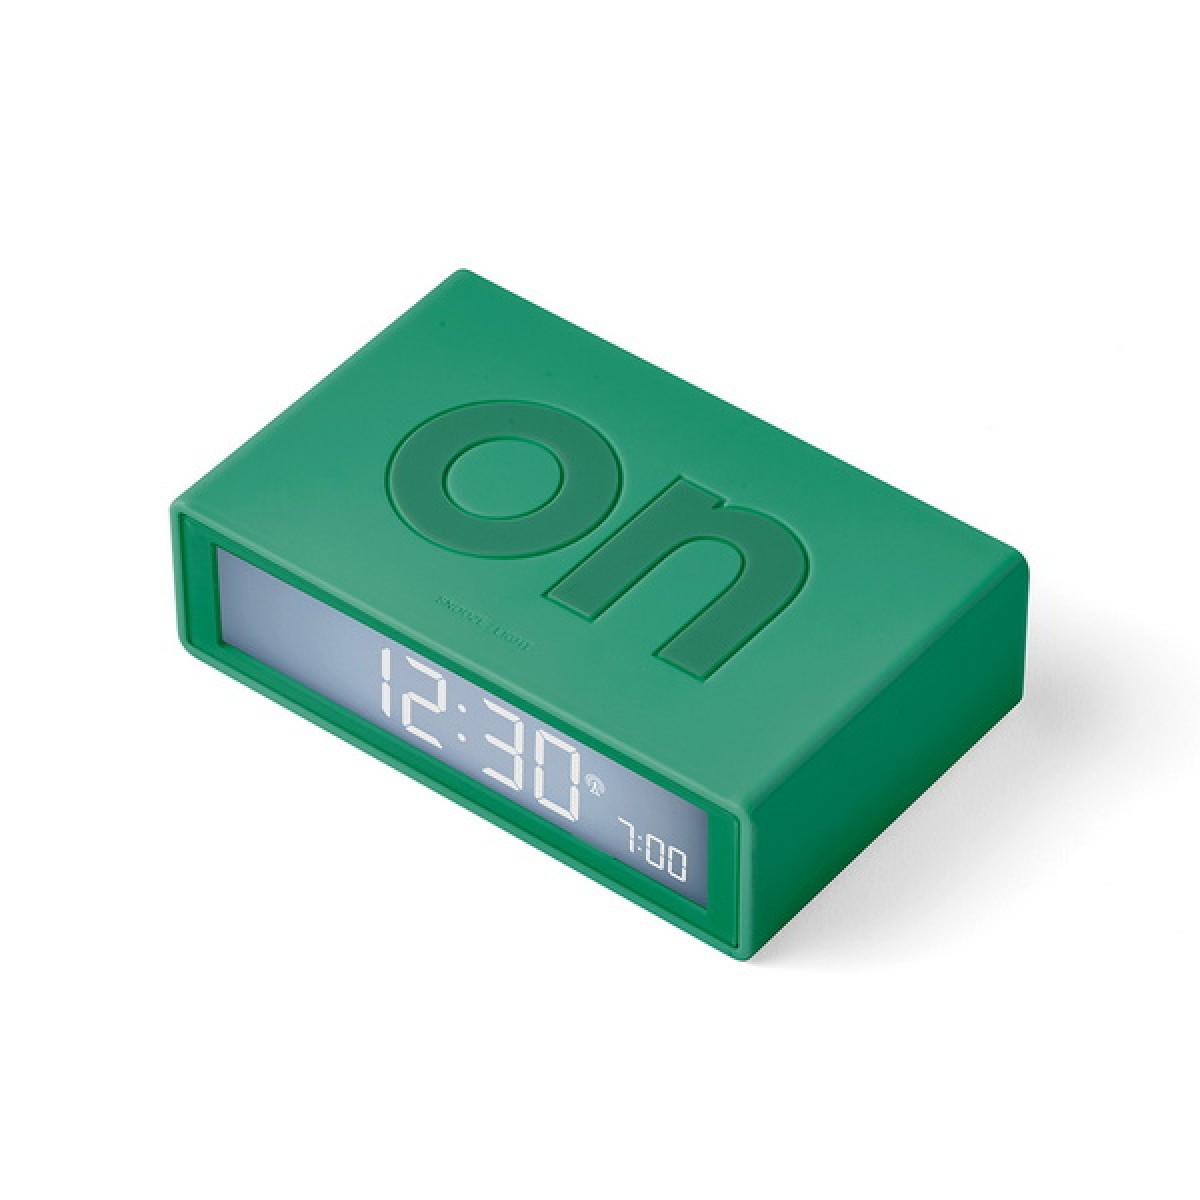 Lexon - Flip - Sveglia LCD reversibile - Green Emerald